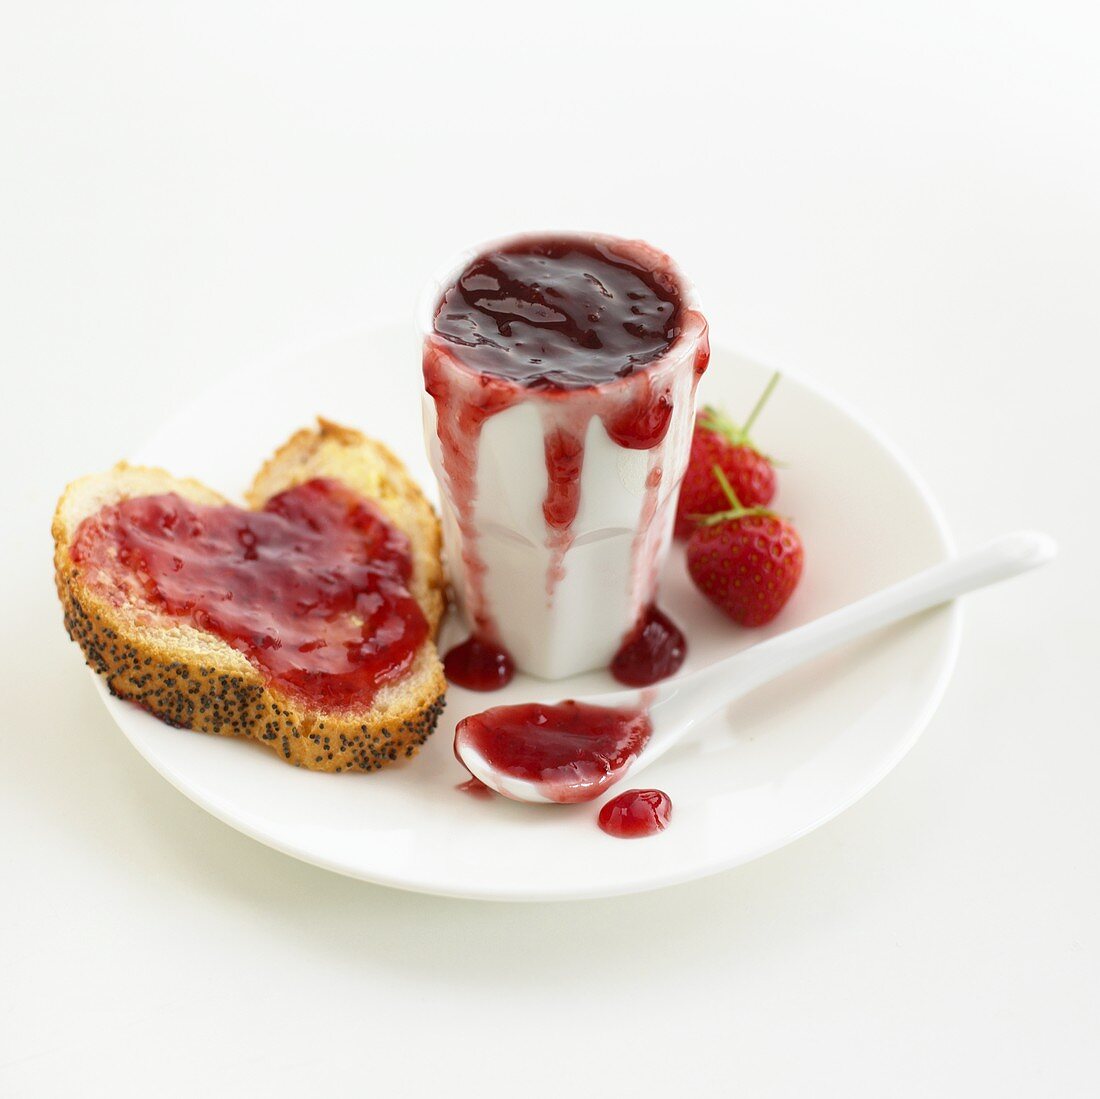 Strawberry jam and slice of bread